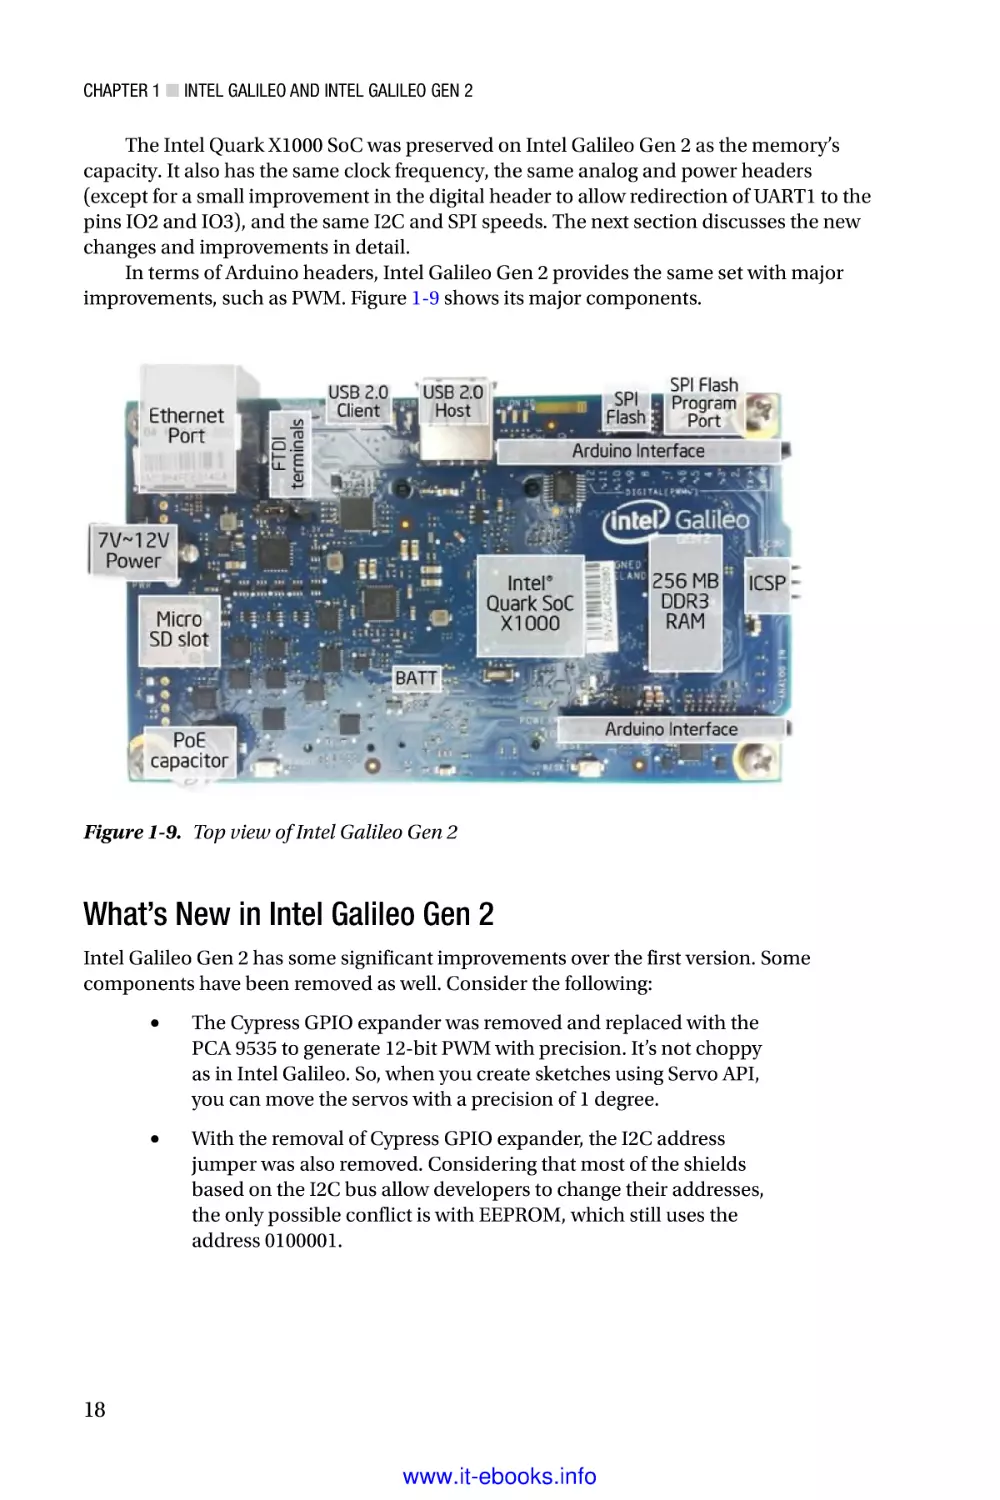 What’s New in Intel Galileo Gen 2